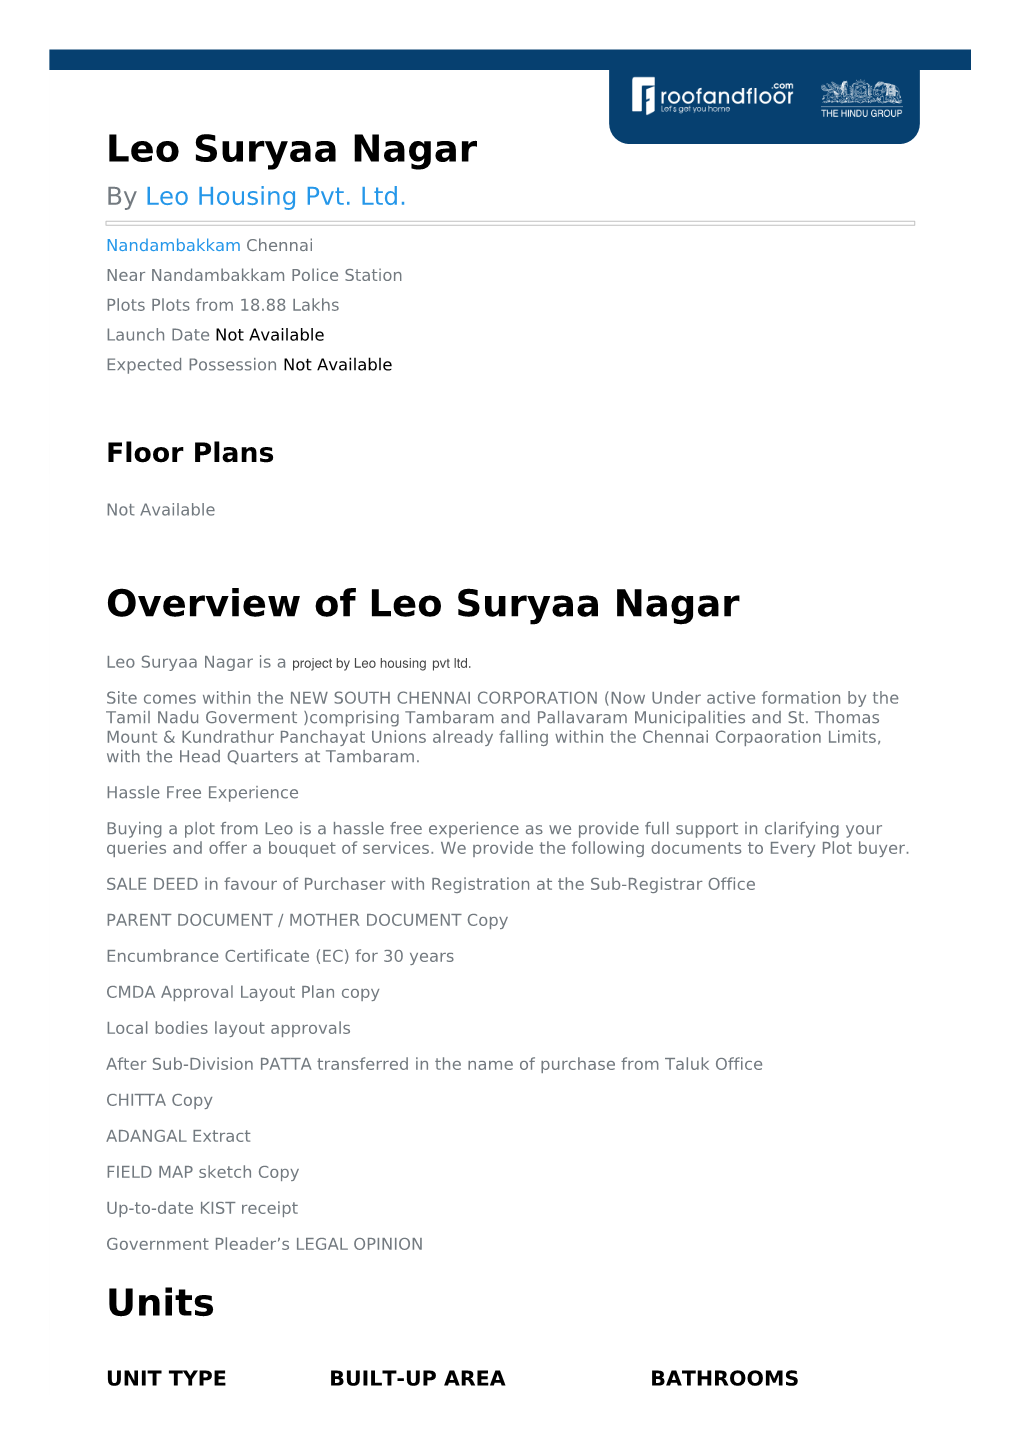 Leo Suryaa Nagar by Leo Housing Pvt